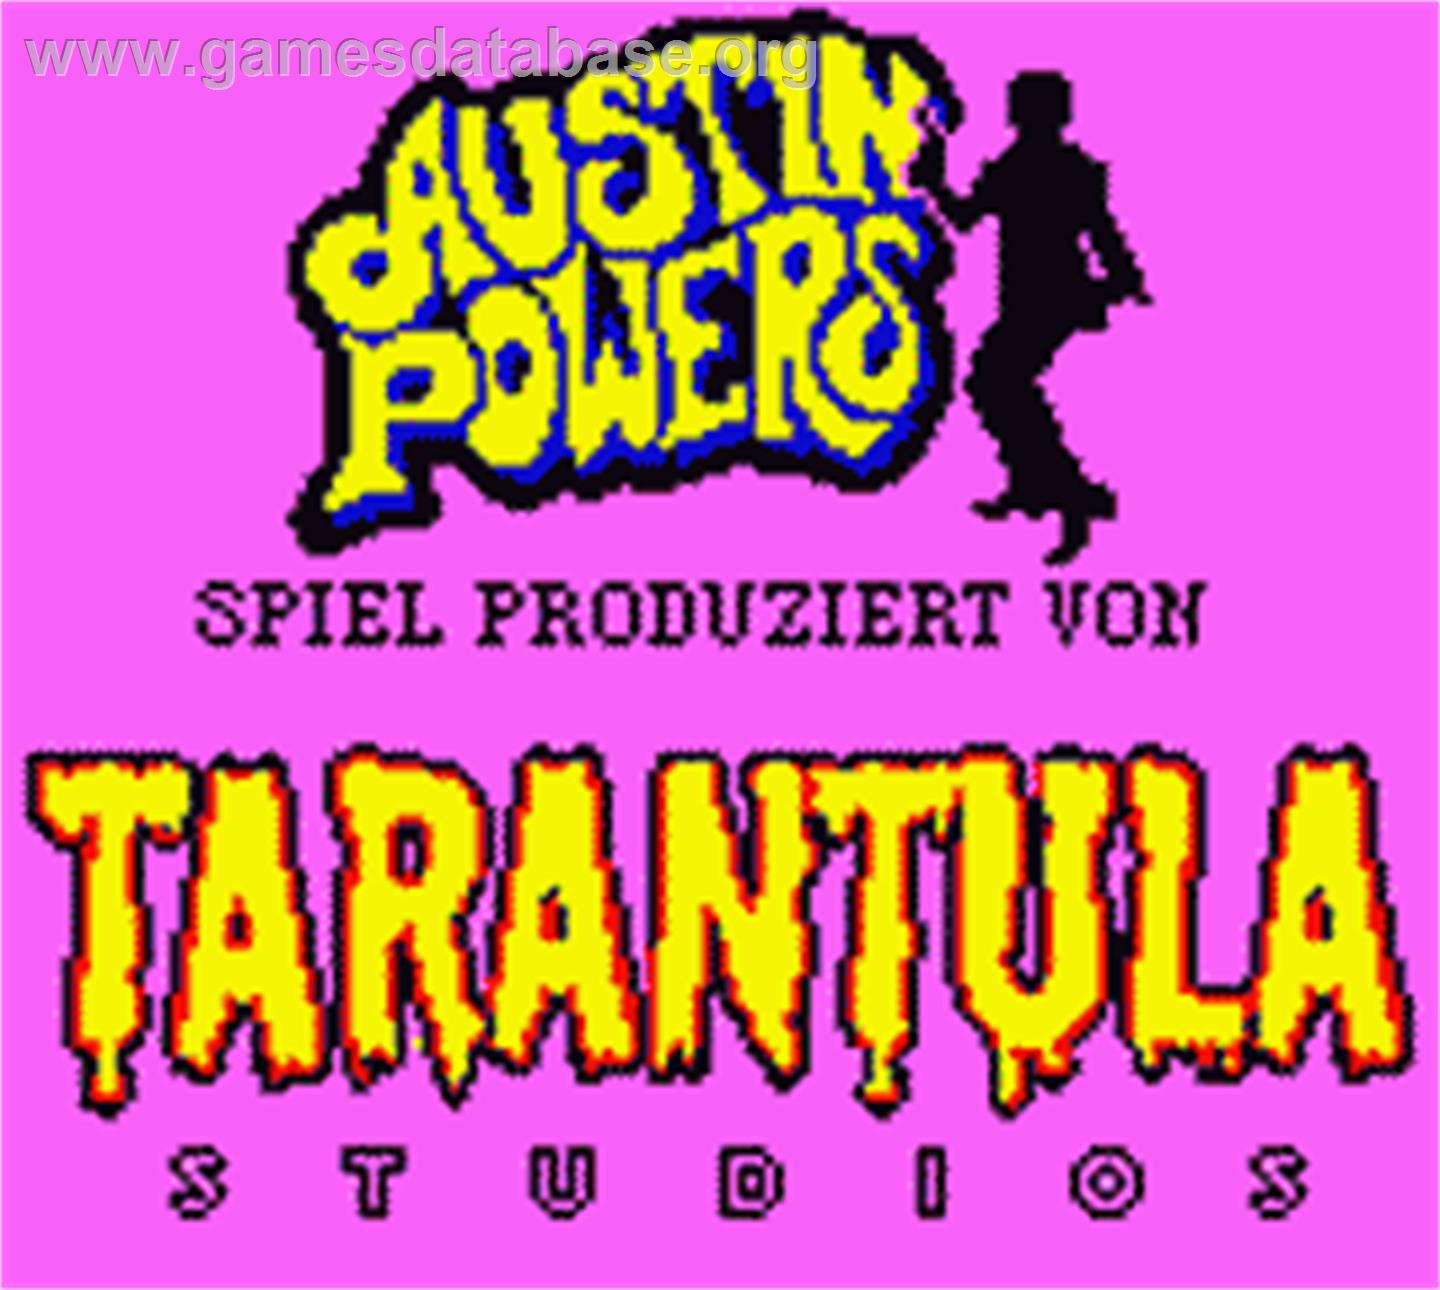 Austin Powers: Oh Behave - Nintendo Game Boy Color - Artwork - Title Screen